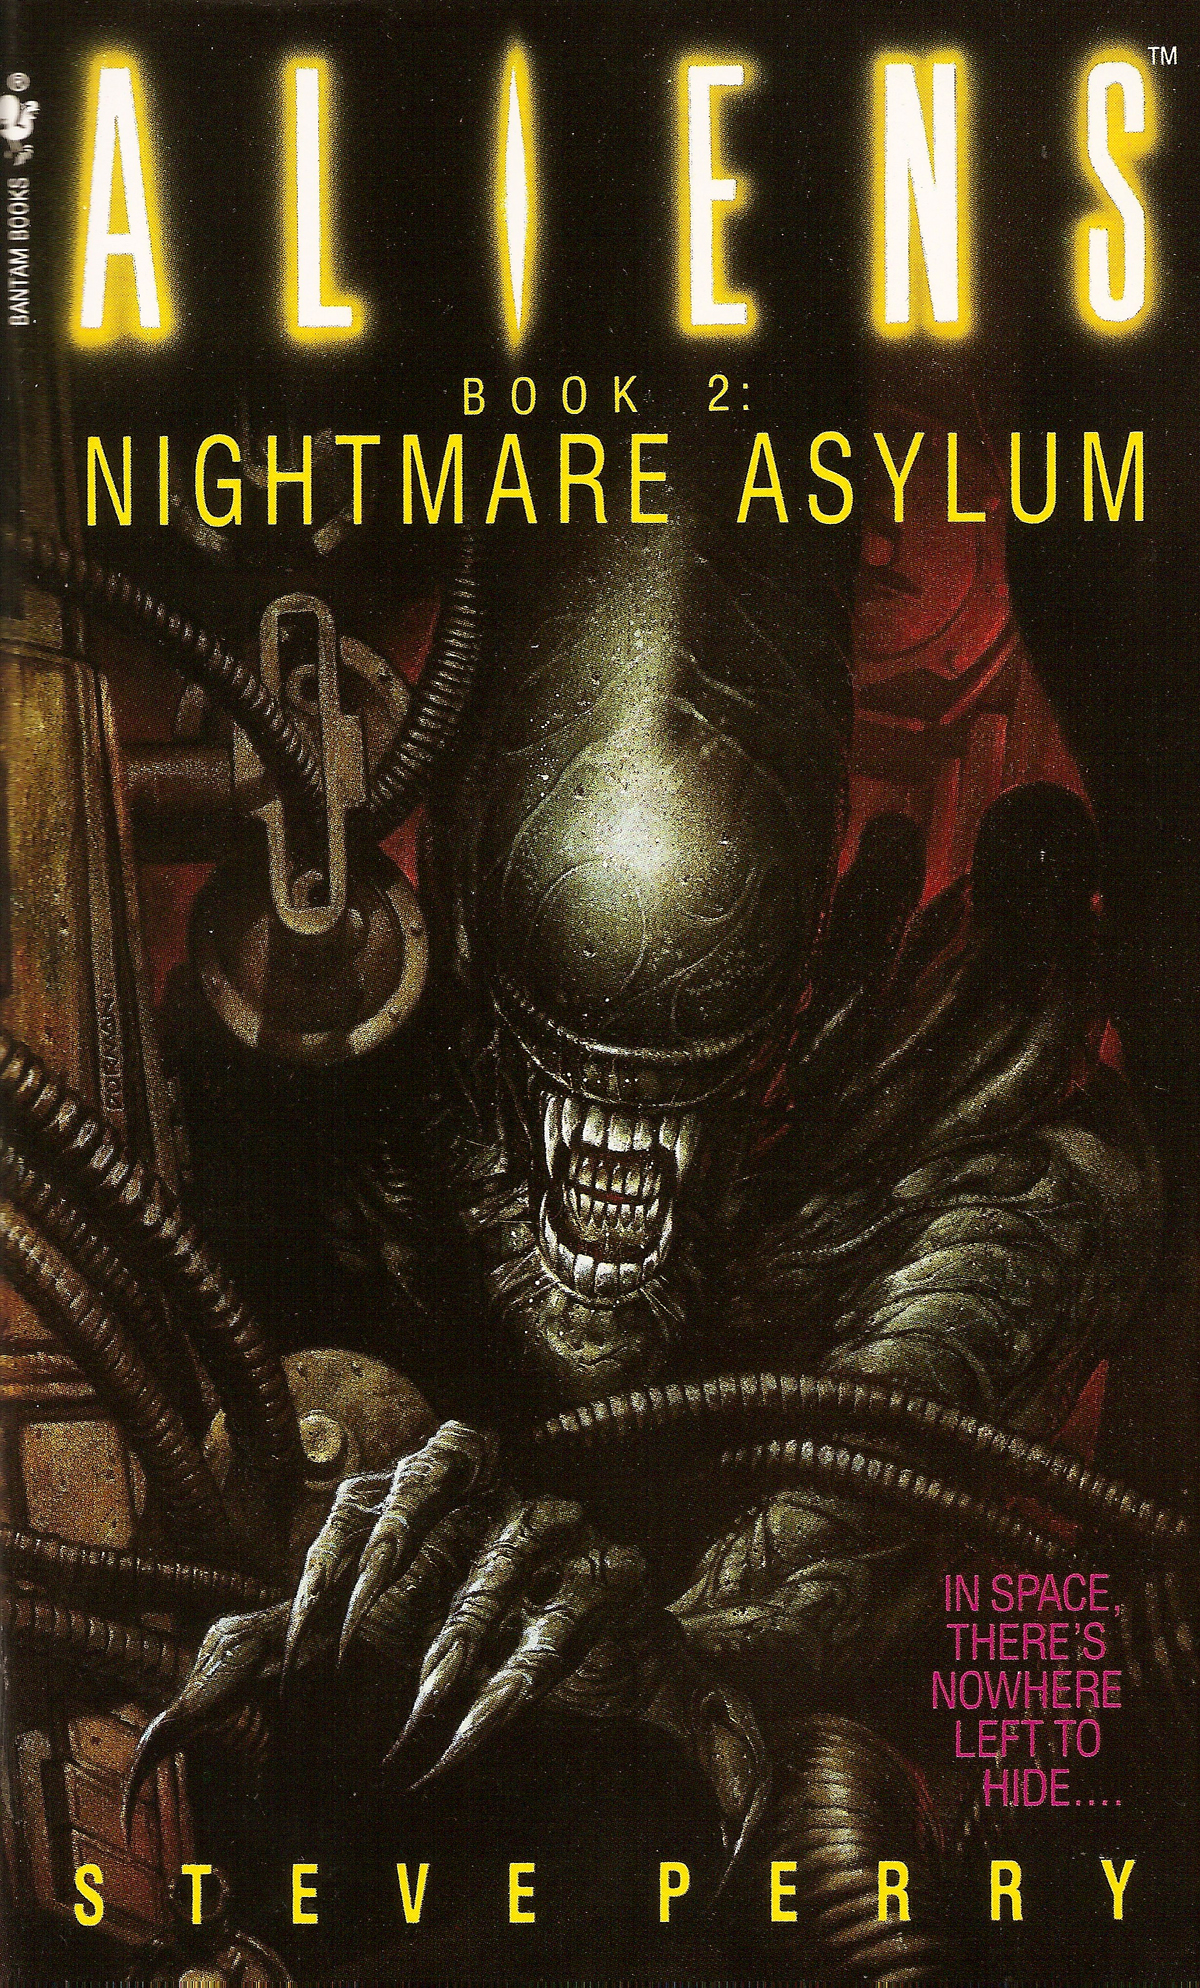 Aliens: Nightmare Asylum Art